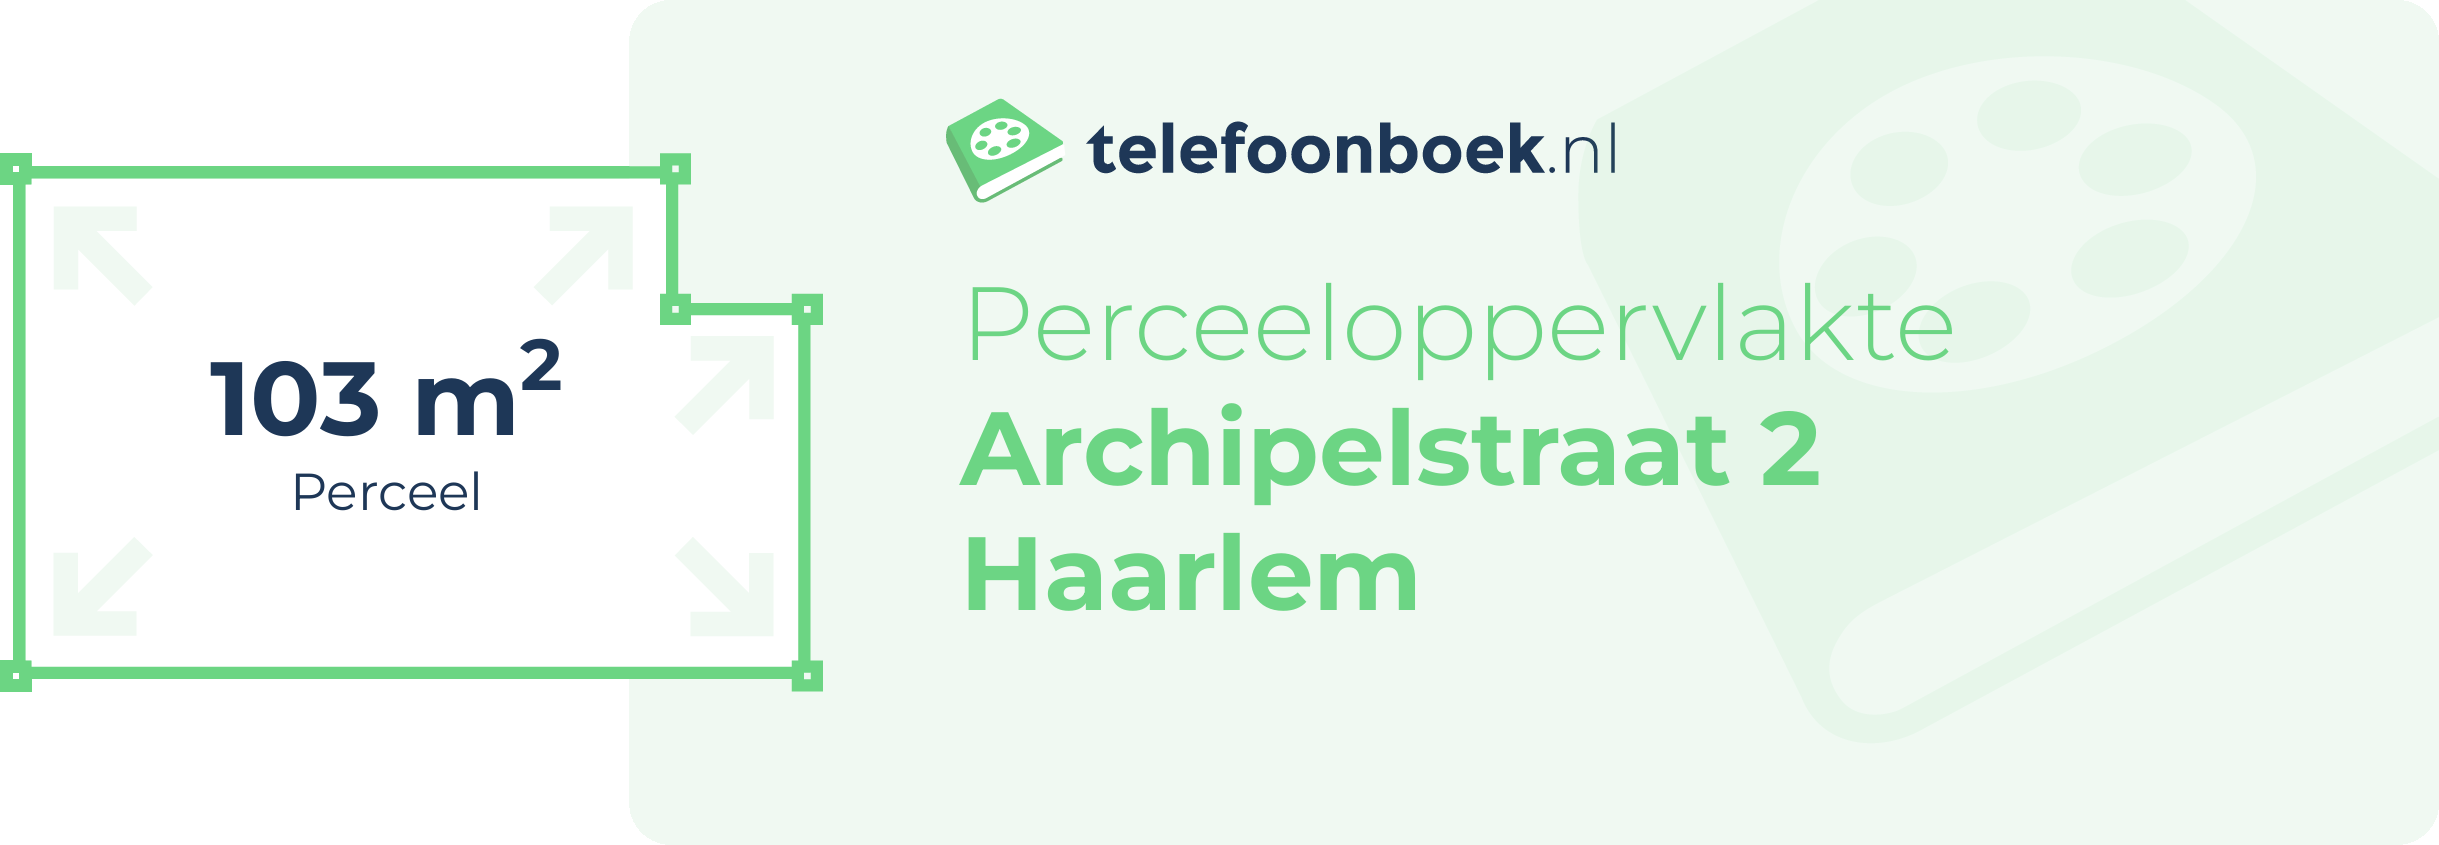 Perceeloppervlakte Archipelstraat 2 Haarlem